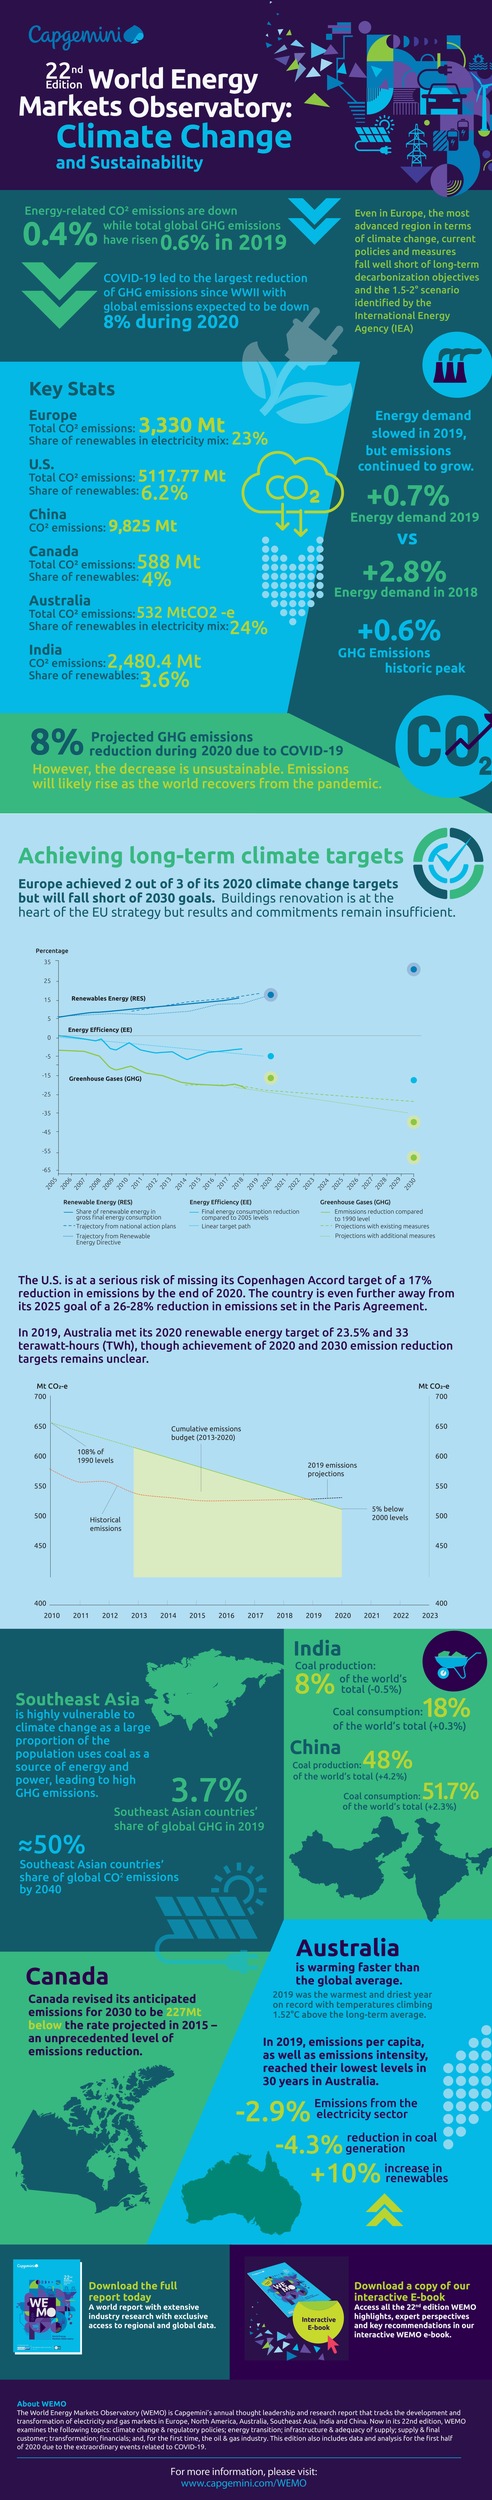 WEMO_Climate_ Change_Infographic.jpg